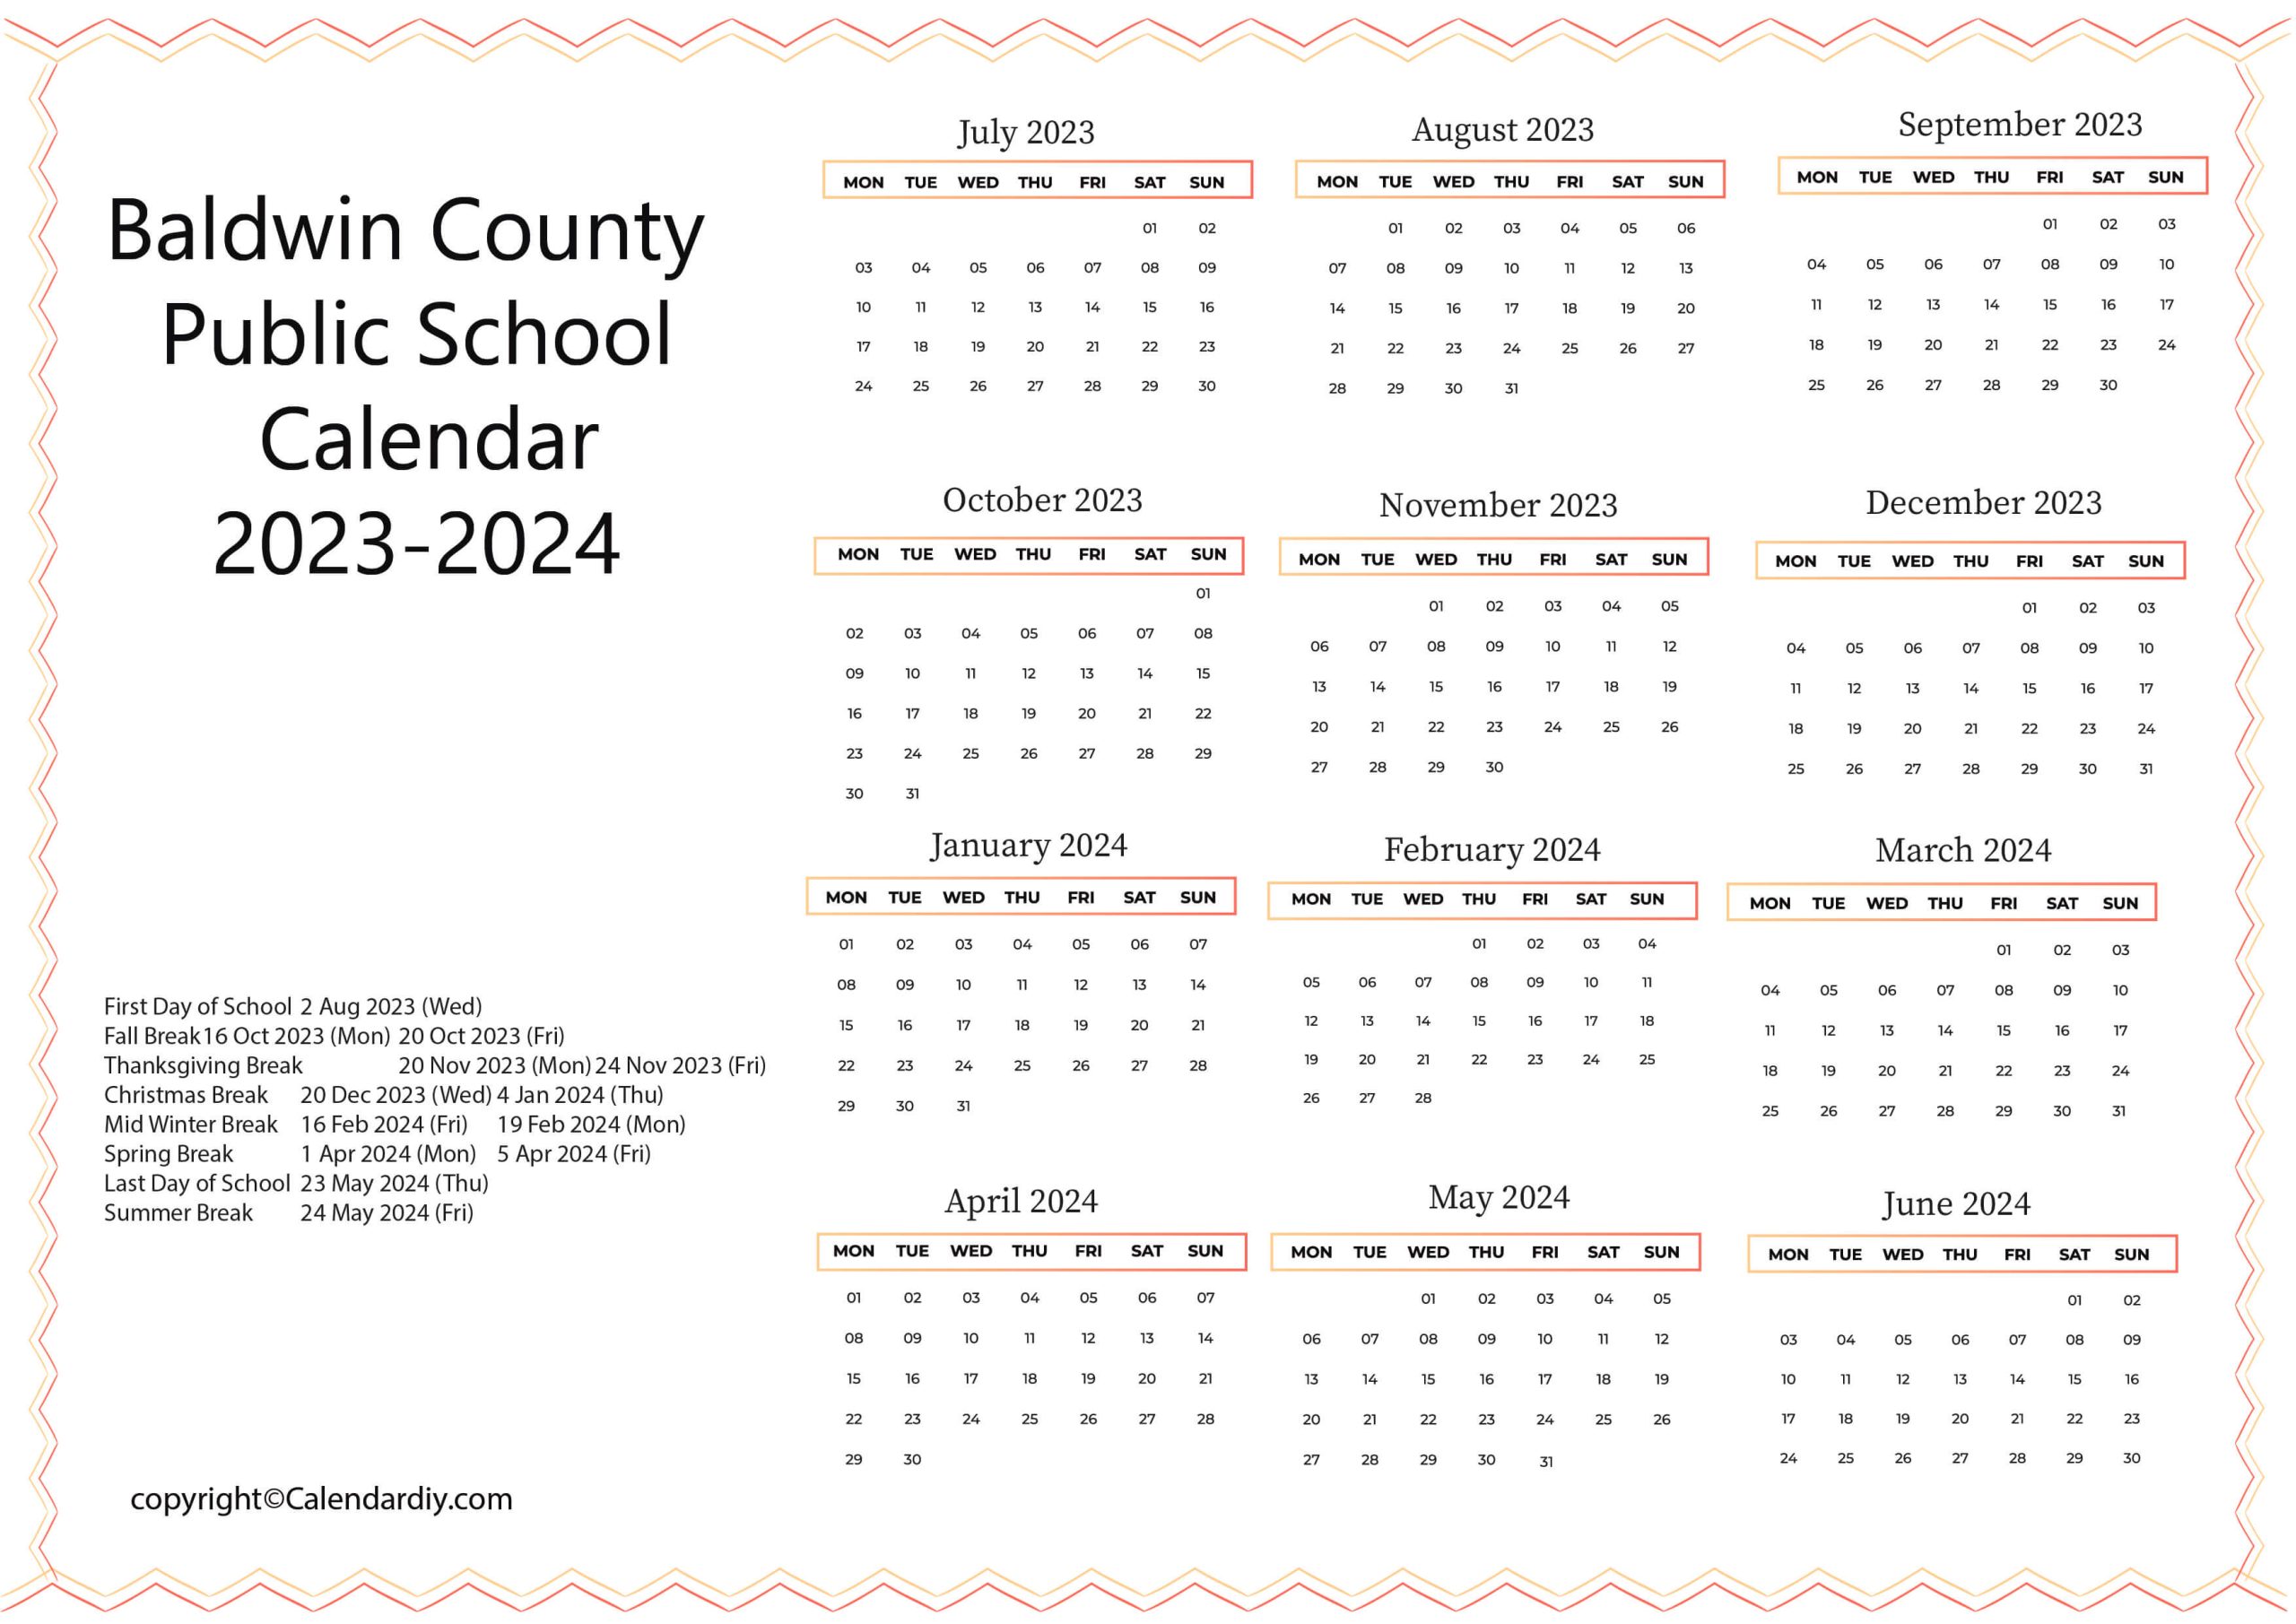 Baldwin County Public Schools In 2023